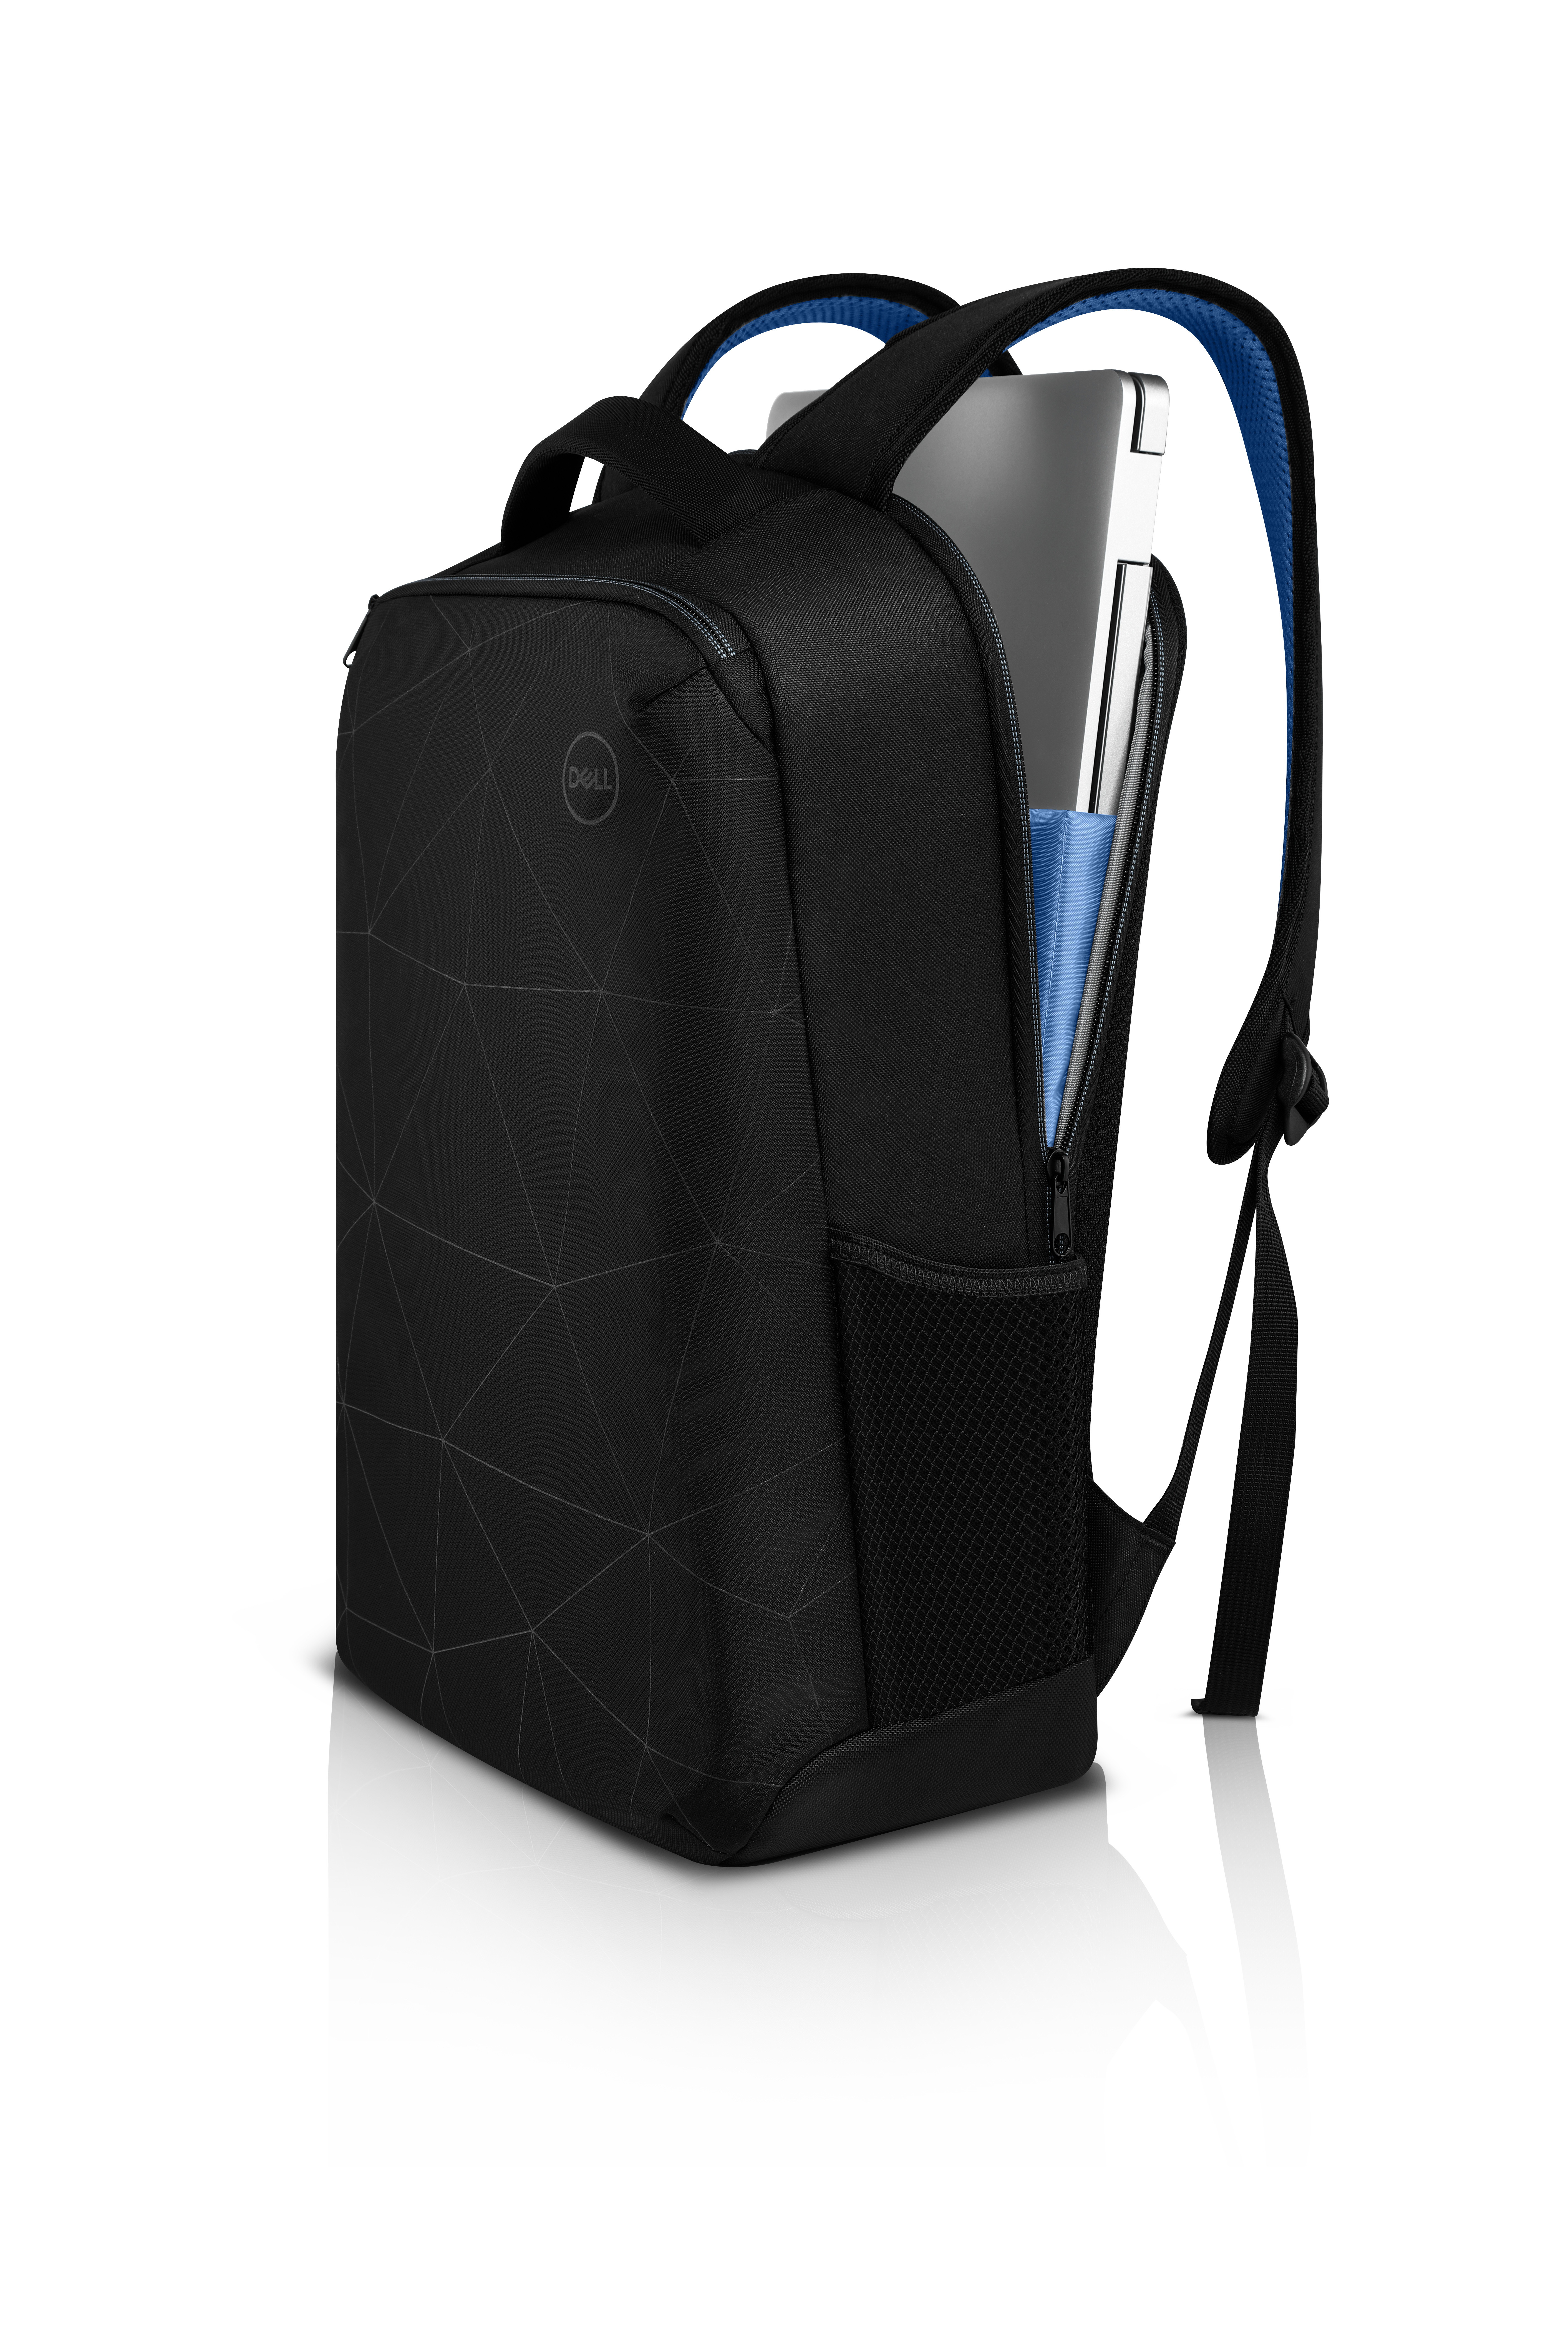 Dell Essential Backpack 15 - Notebook-Rucksack - 38.1 cm (15")